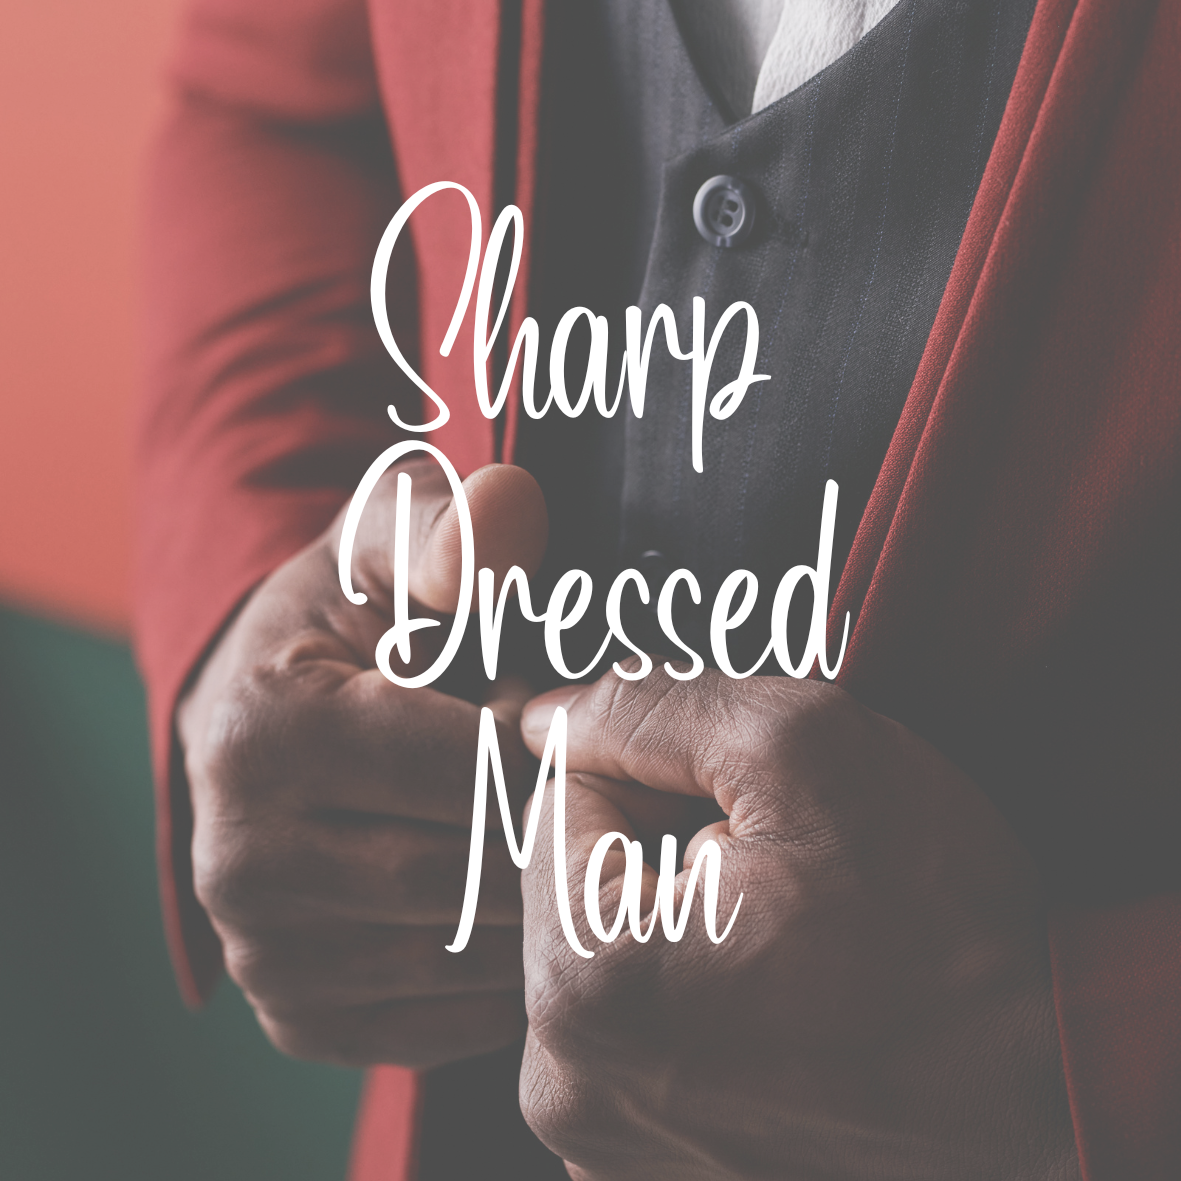 Sharp Dressed Man Cup